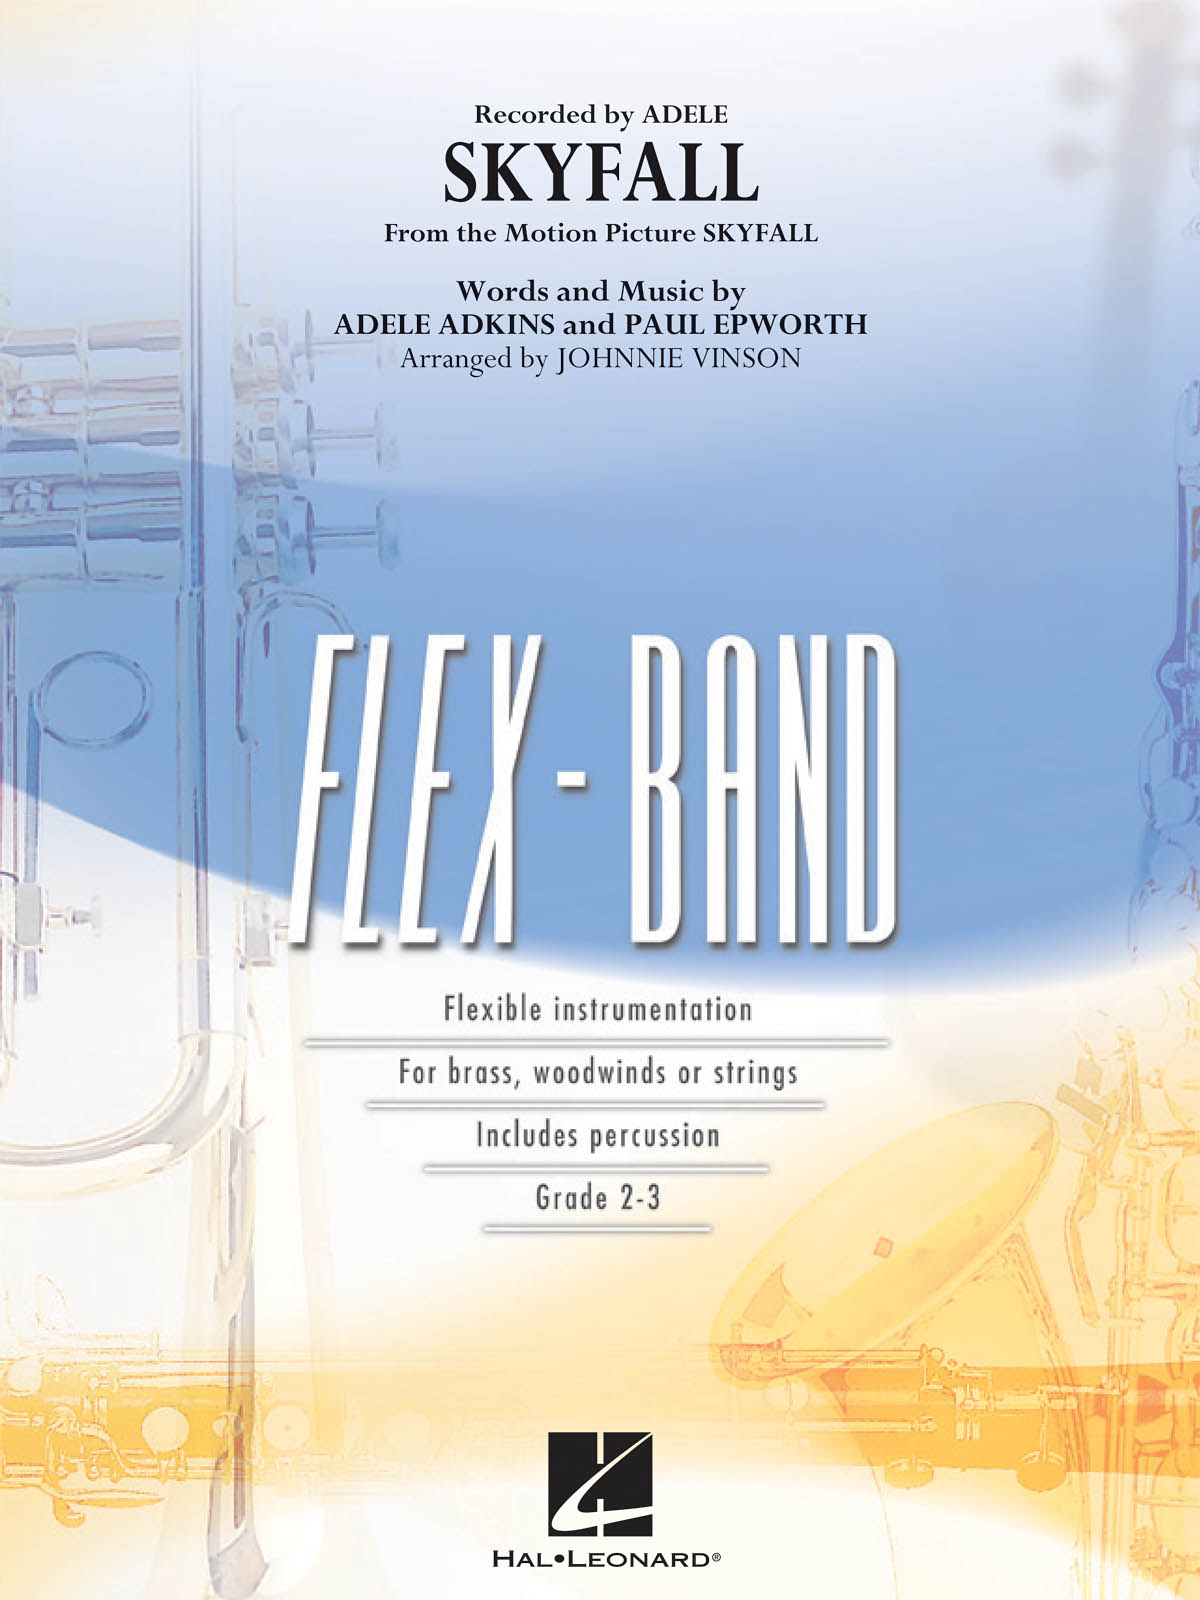 Paul Epworth: Skyfall - Flexband: Concert Band: Score